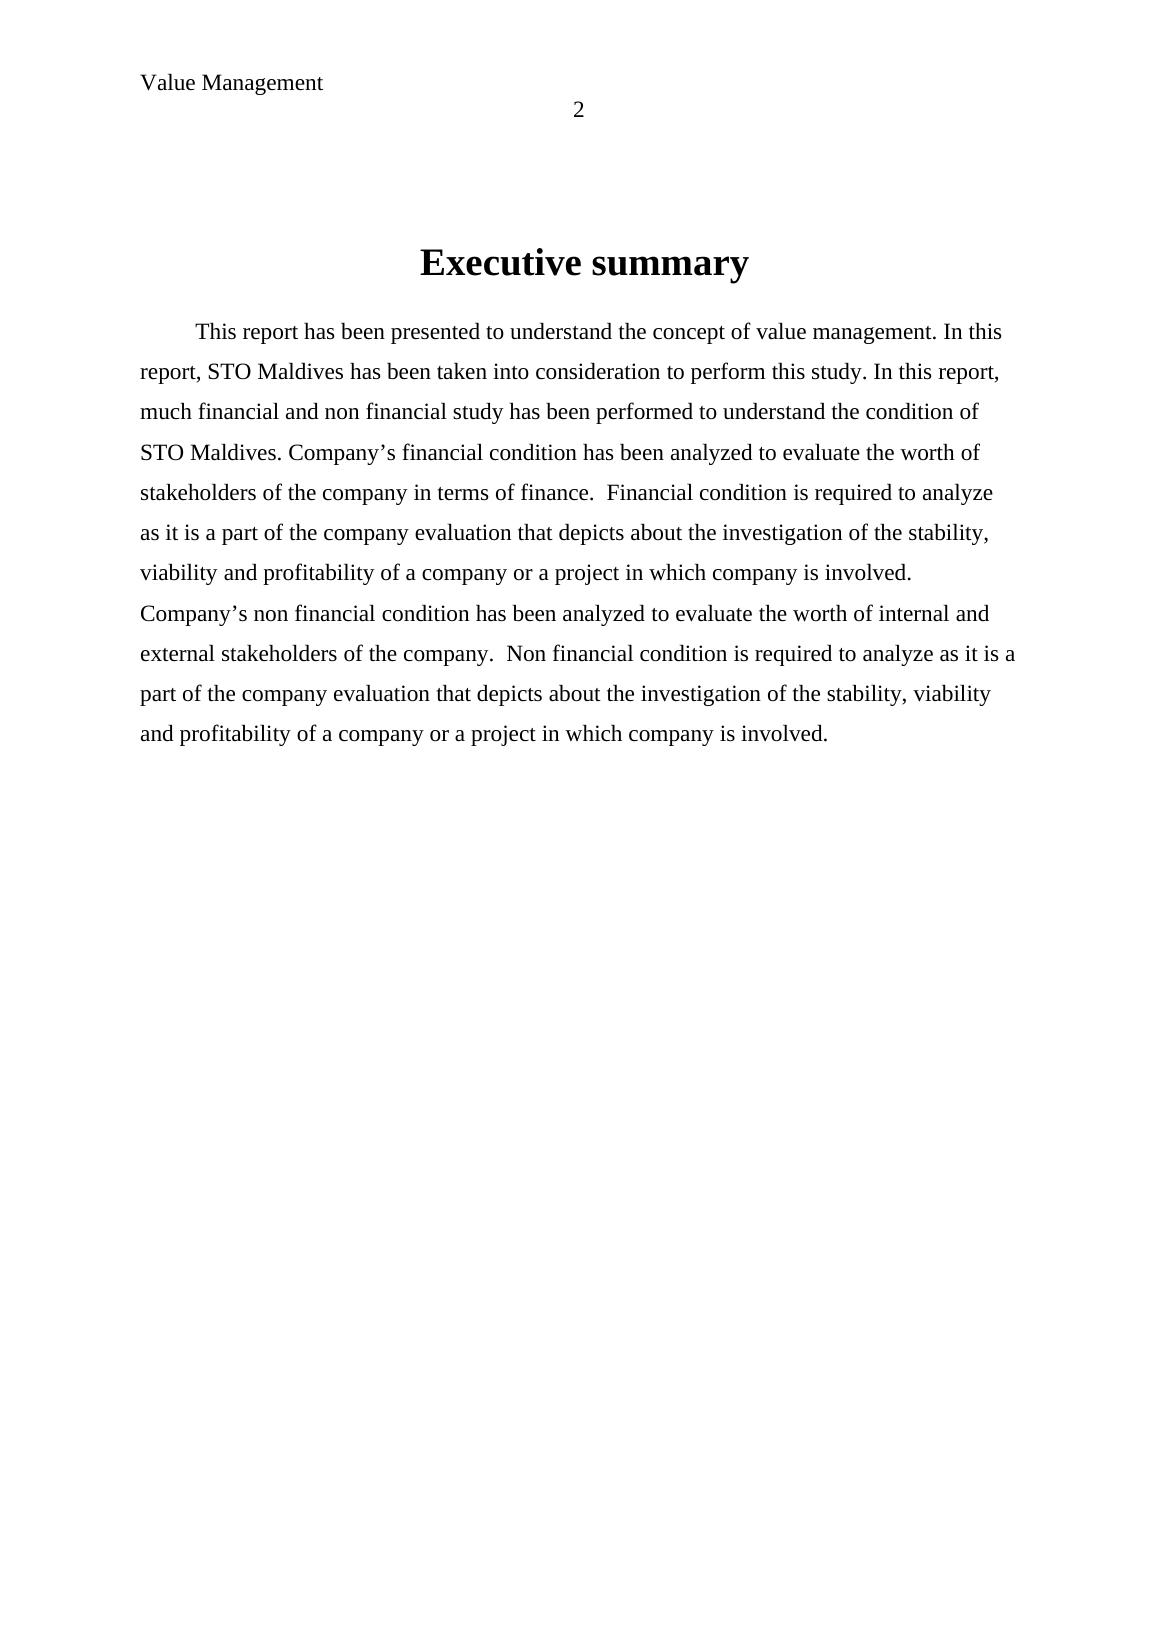 Value Management Executive Summary: A Study of STO Maldives_2